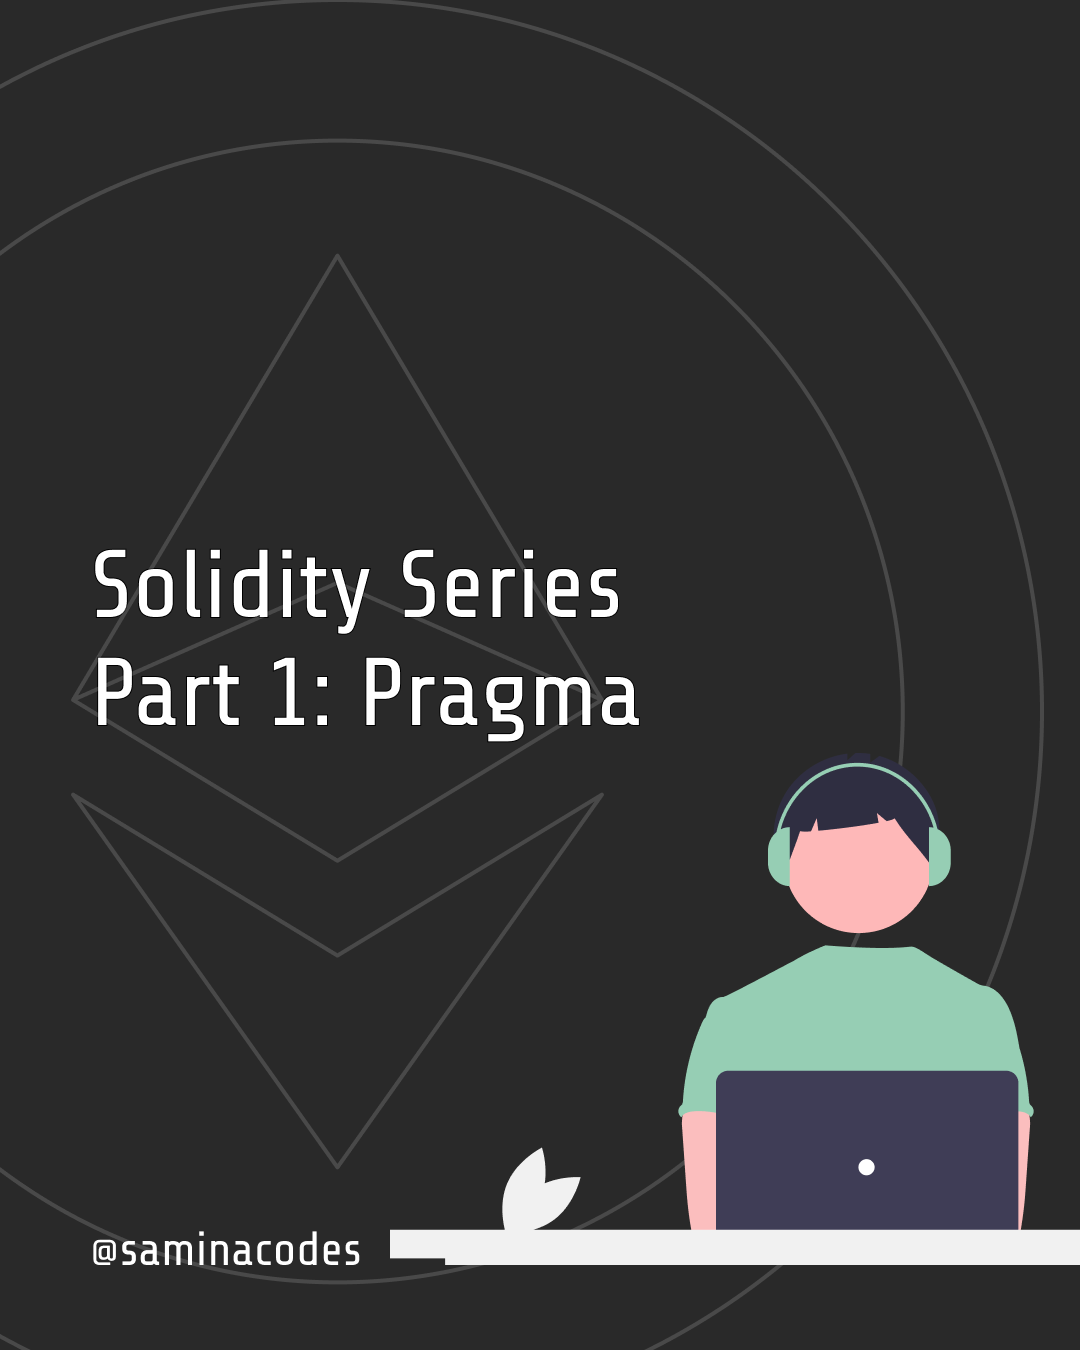 Solidity Series: Part 1, Pragma